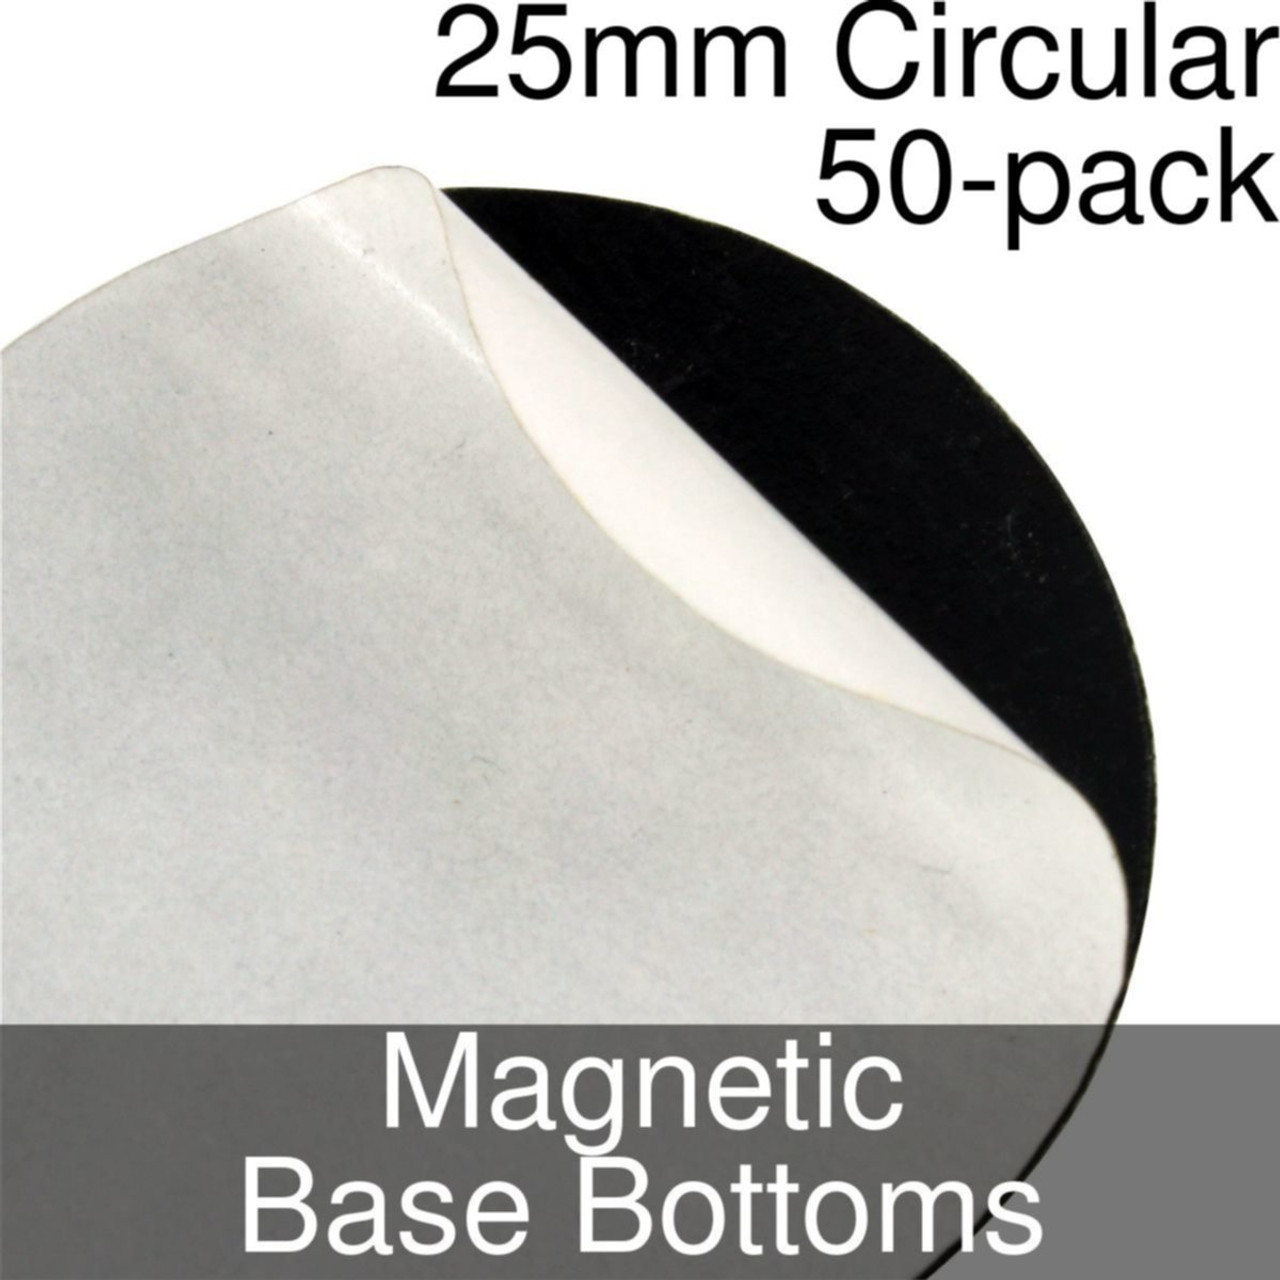 25mm Circular Self Adhesive Magnetic Base Bottom 50 count